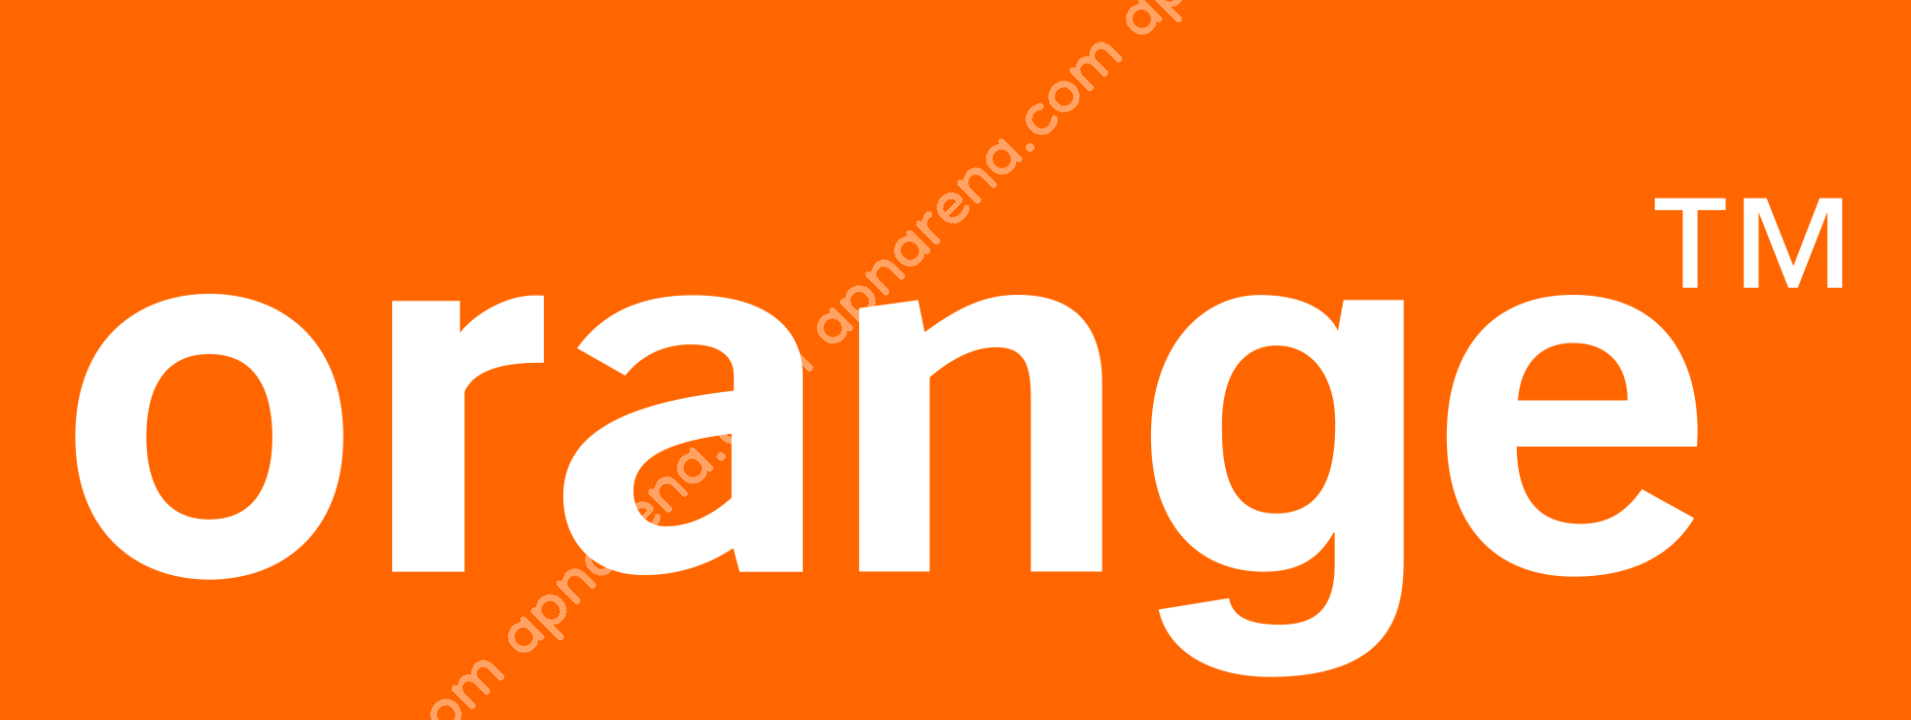 Orange Egypt (Mobinil) APN Internet Settings Android iPhone